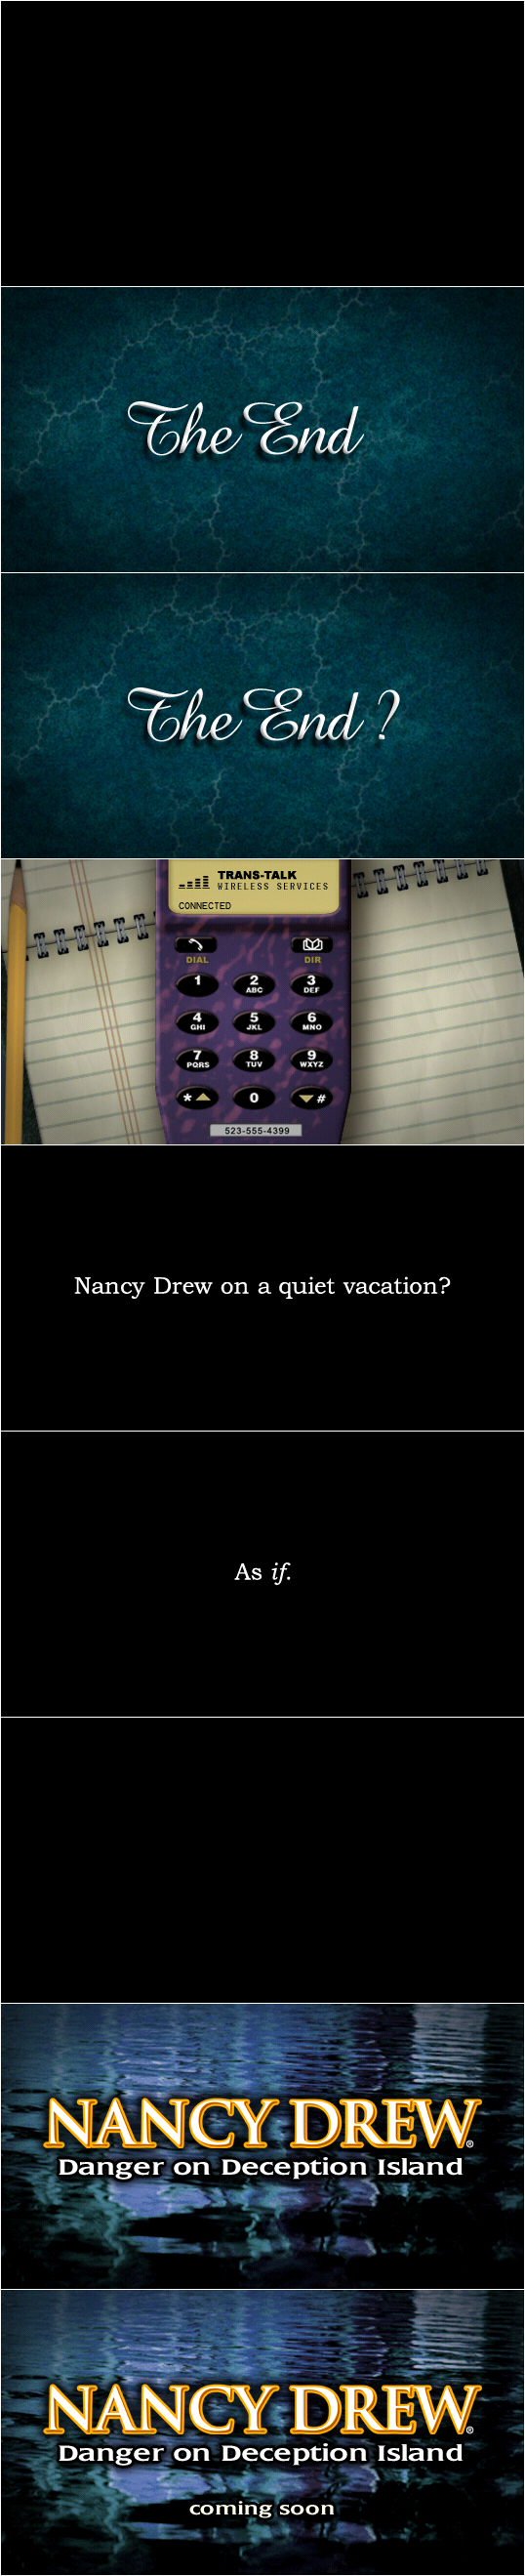 Nancy Drew: The Haunted Carousel - Next Game Teaser